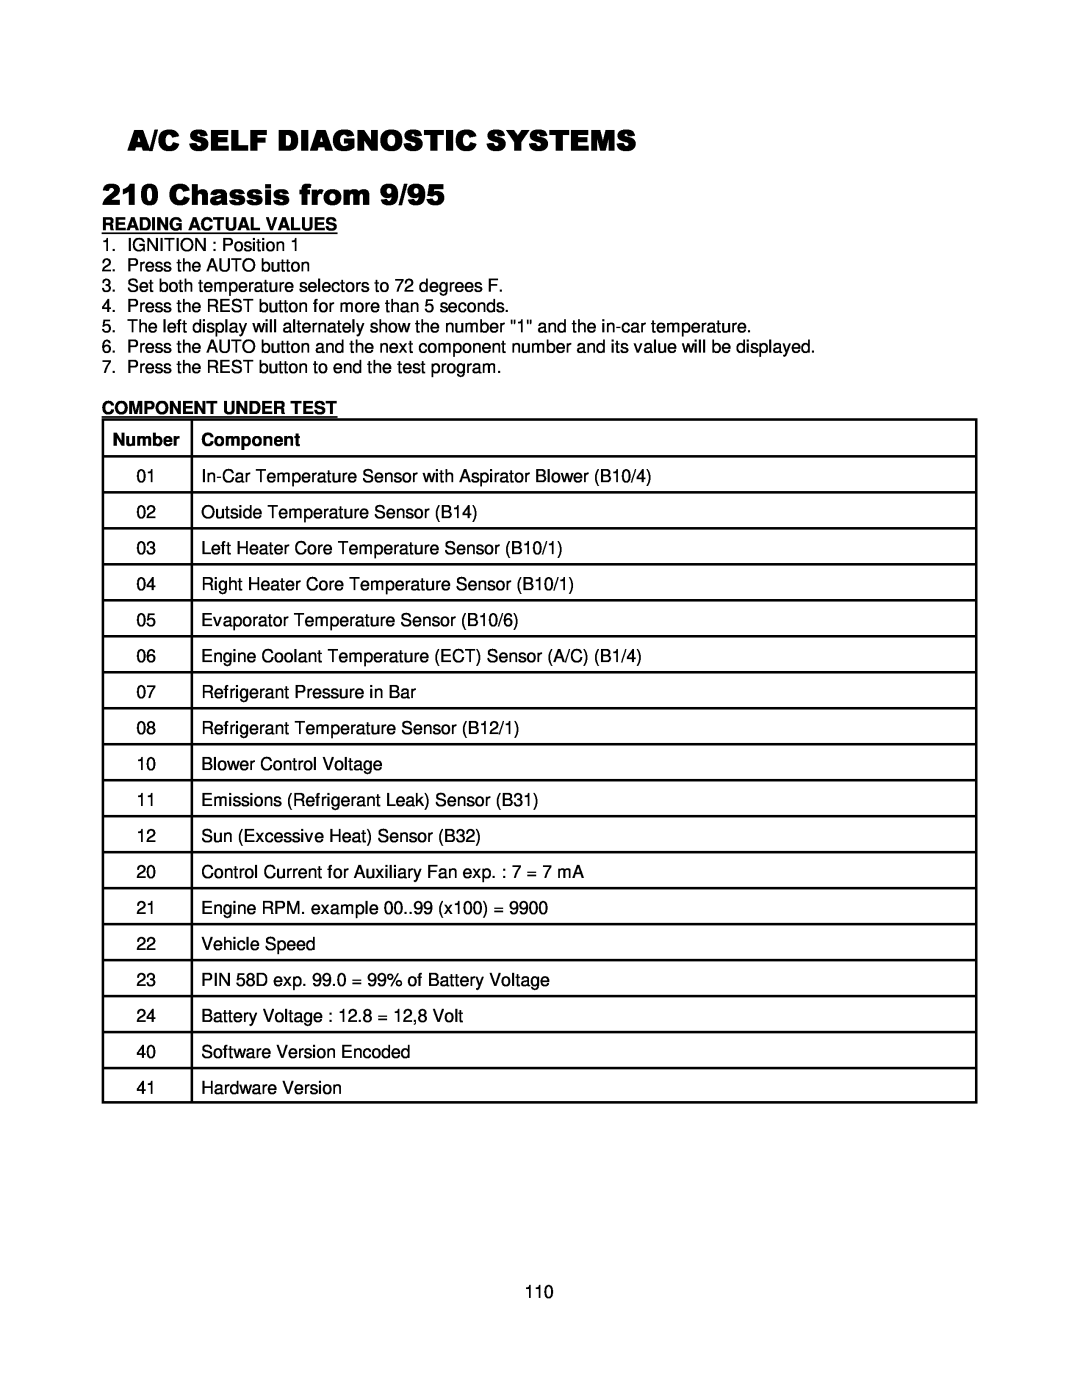 Mercedes-Benz CS1000 manual 46+!2/#779, Reading Actual Values, Component Under Test, Number 